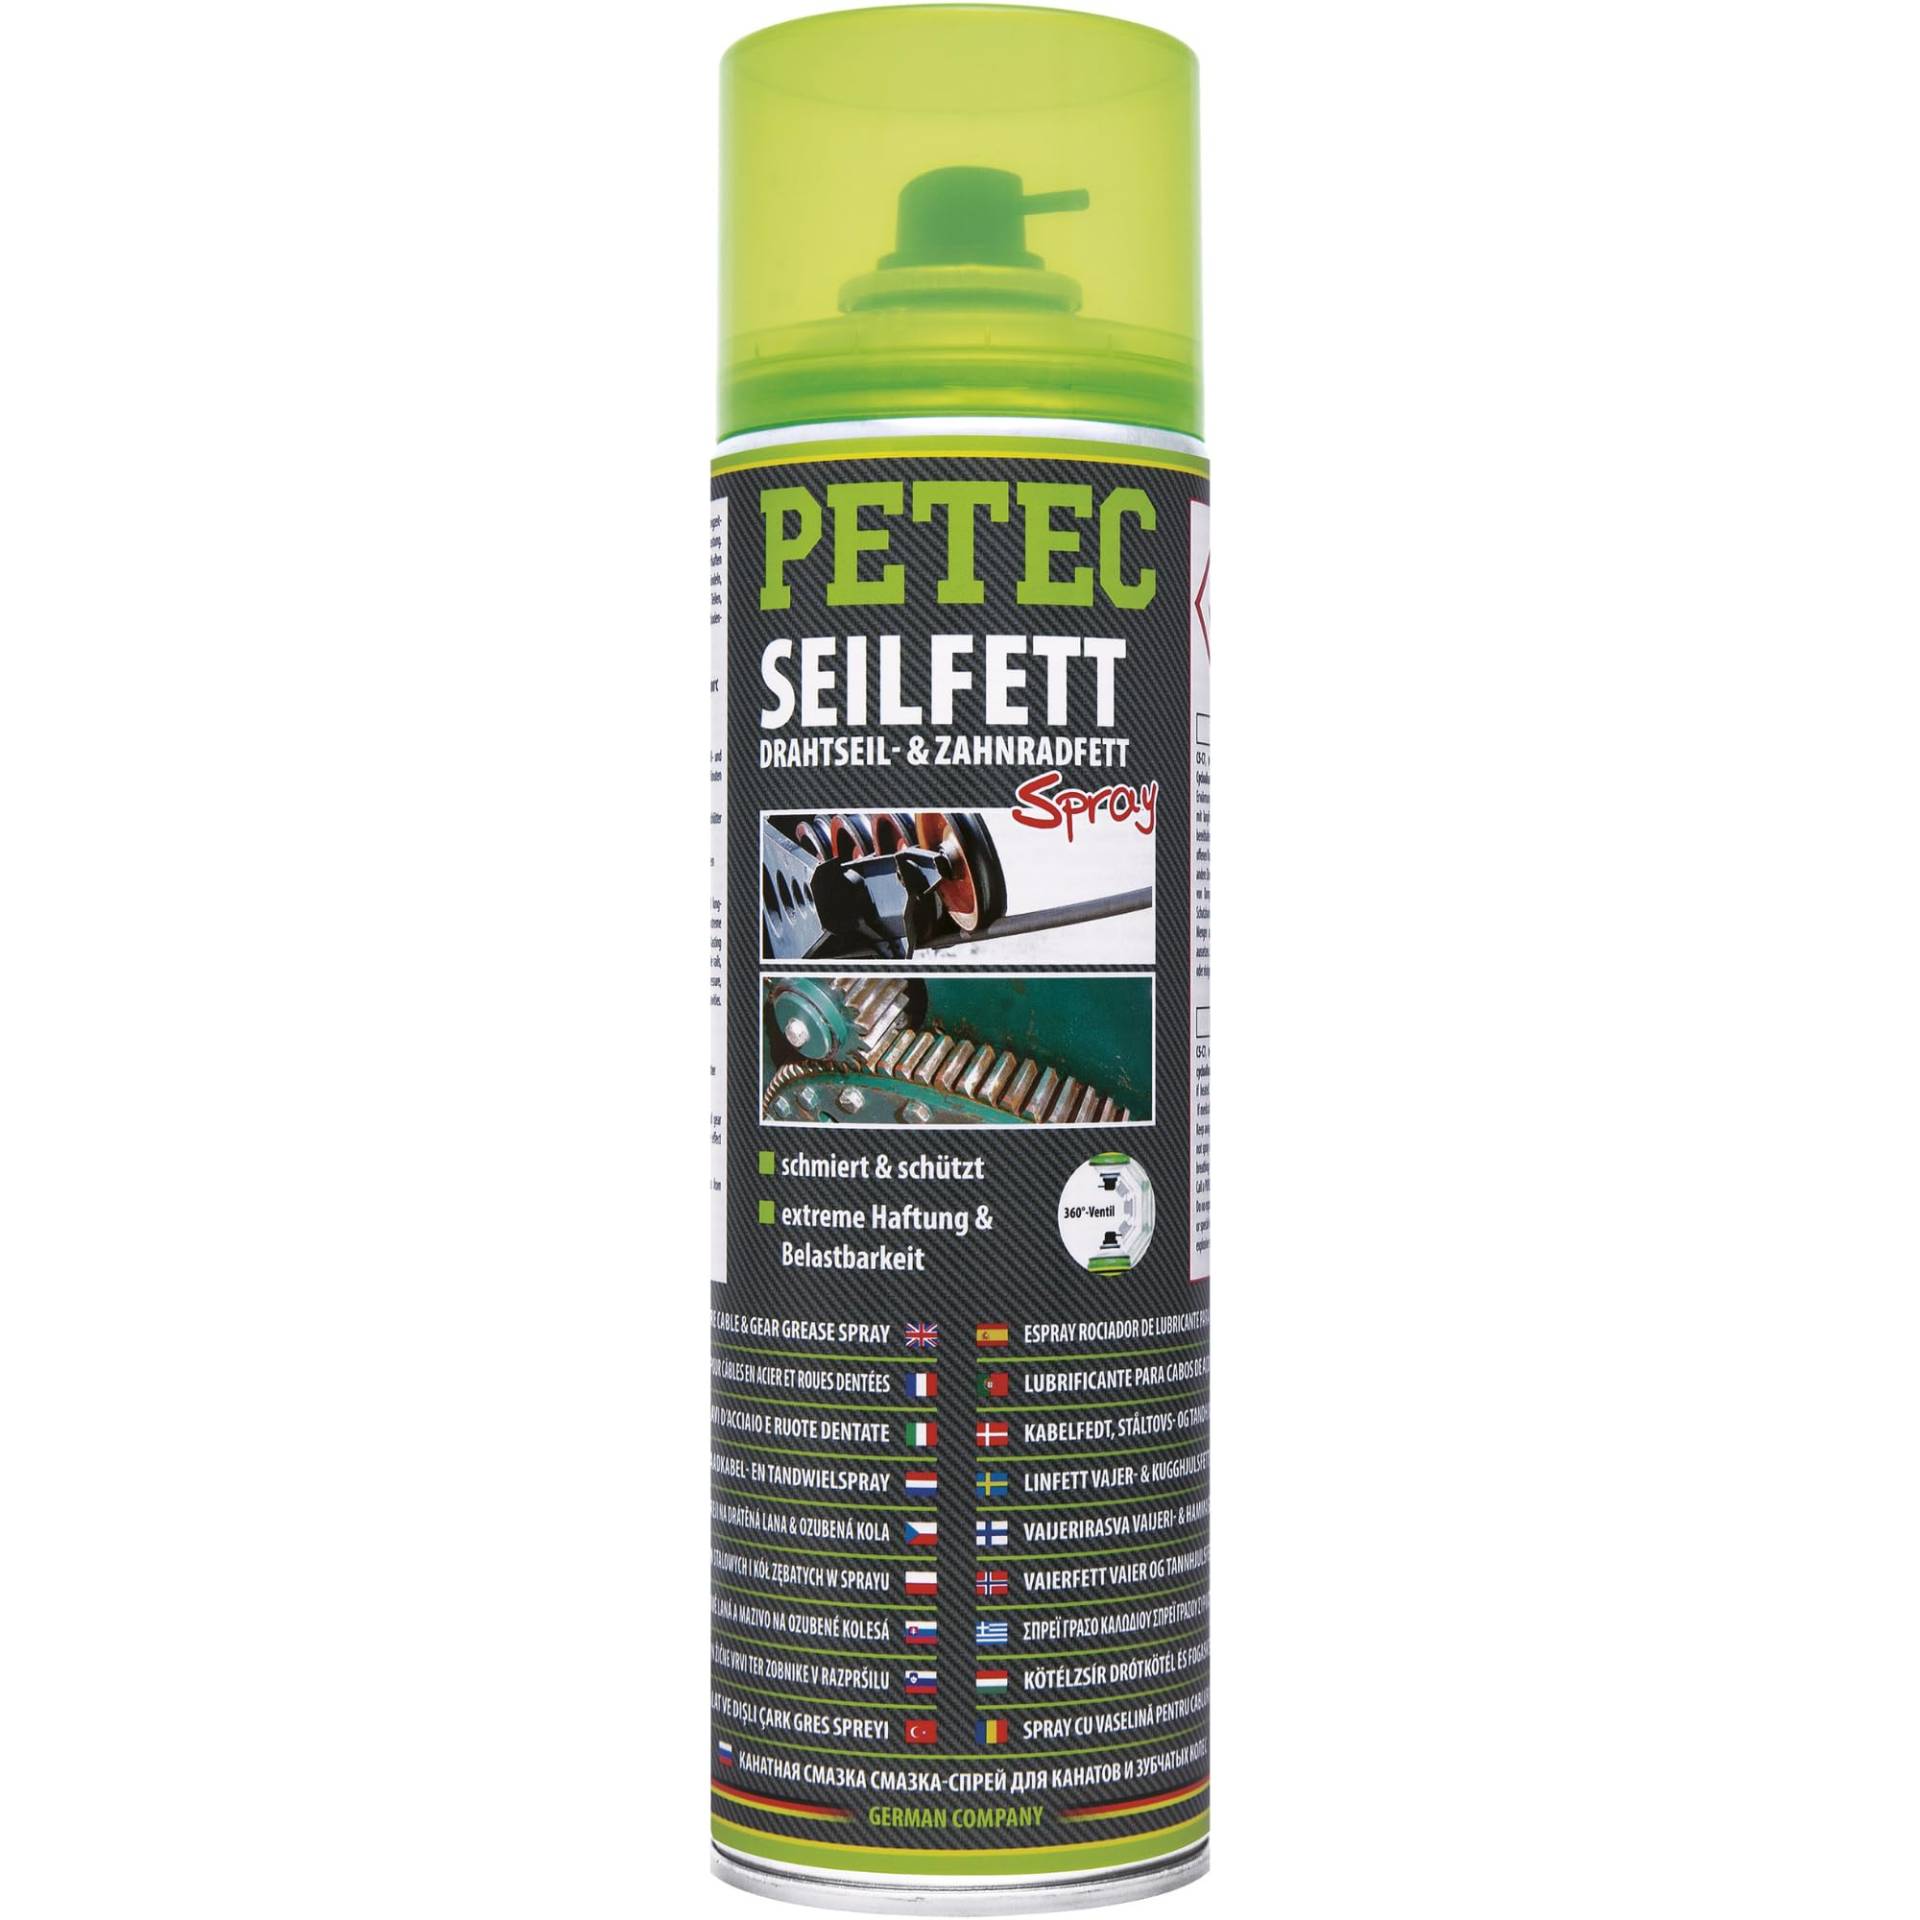 PETEC Seilfett, Drahtseil- & Zahnradfett, 500 ml Spray 71650, schwarzes Fett, inkl. Bitumen-Anteil von PETEC